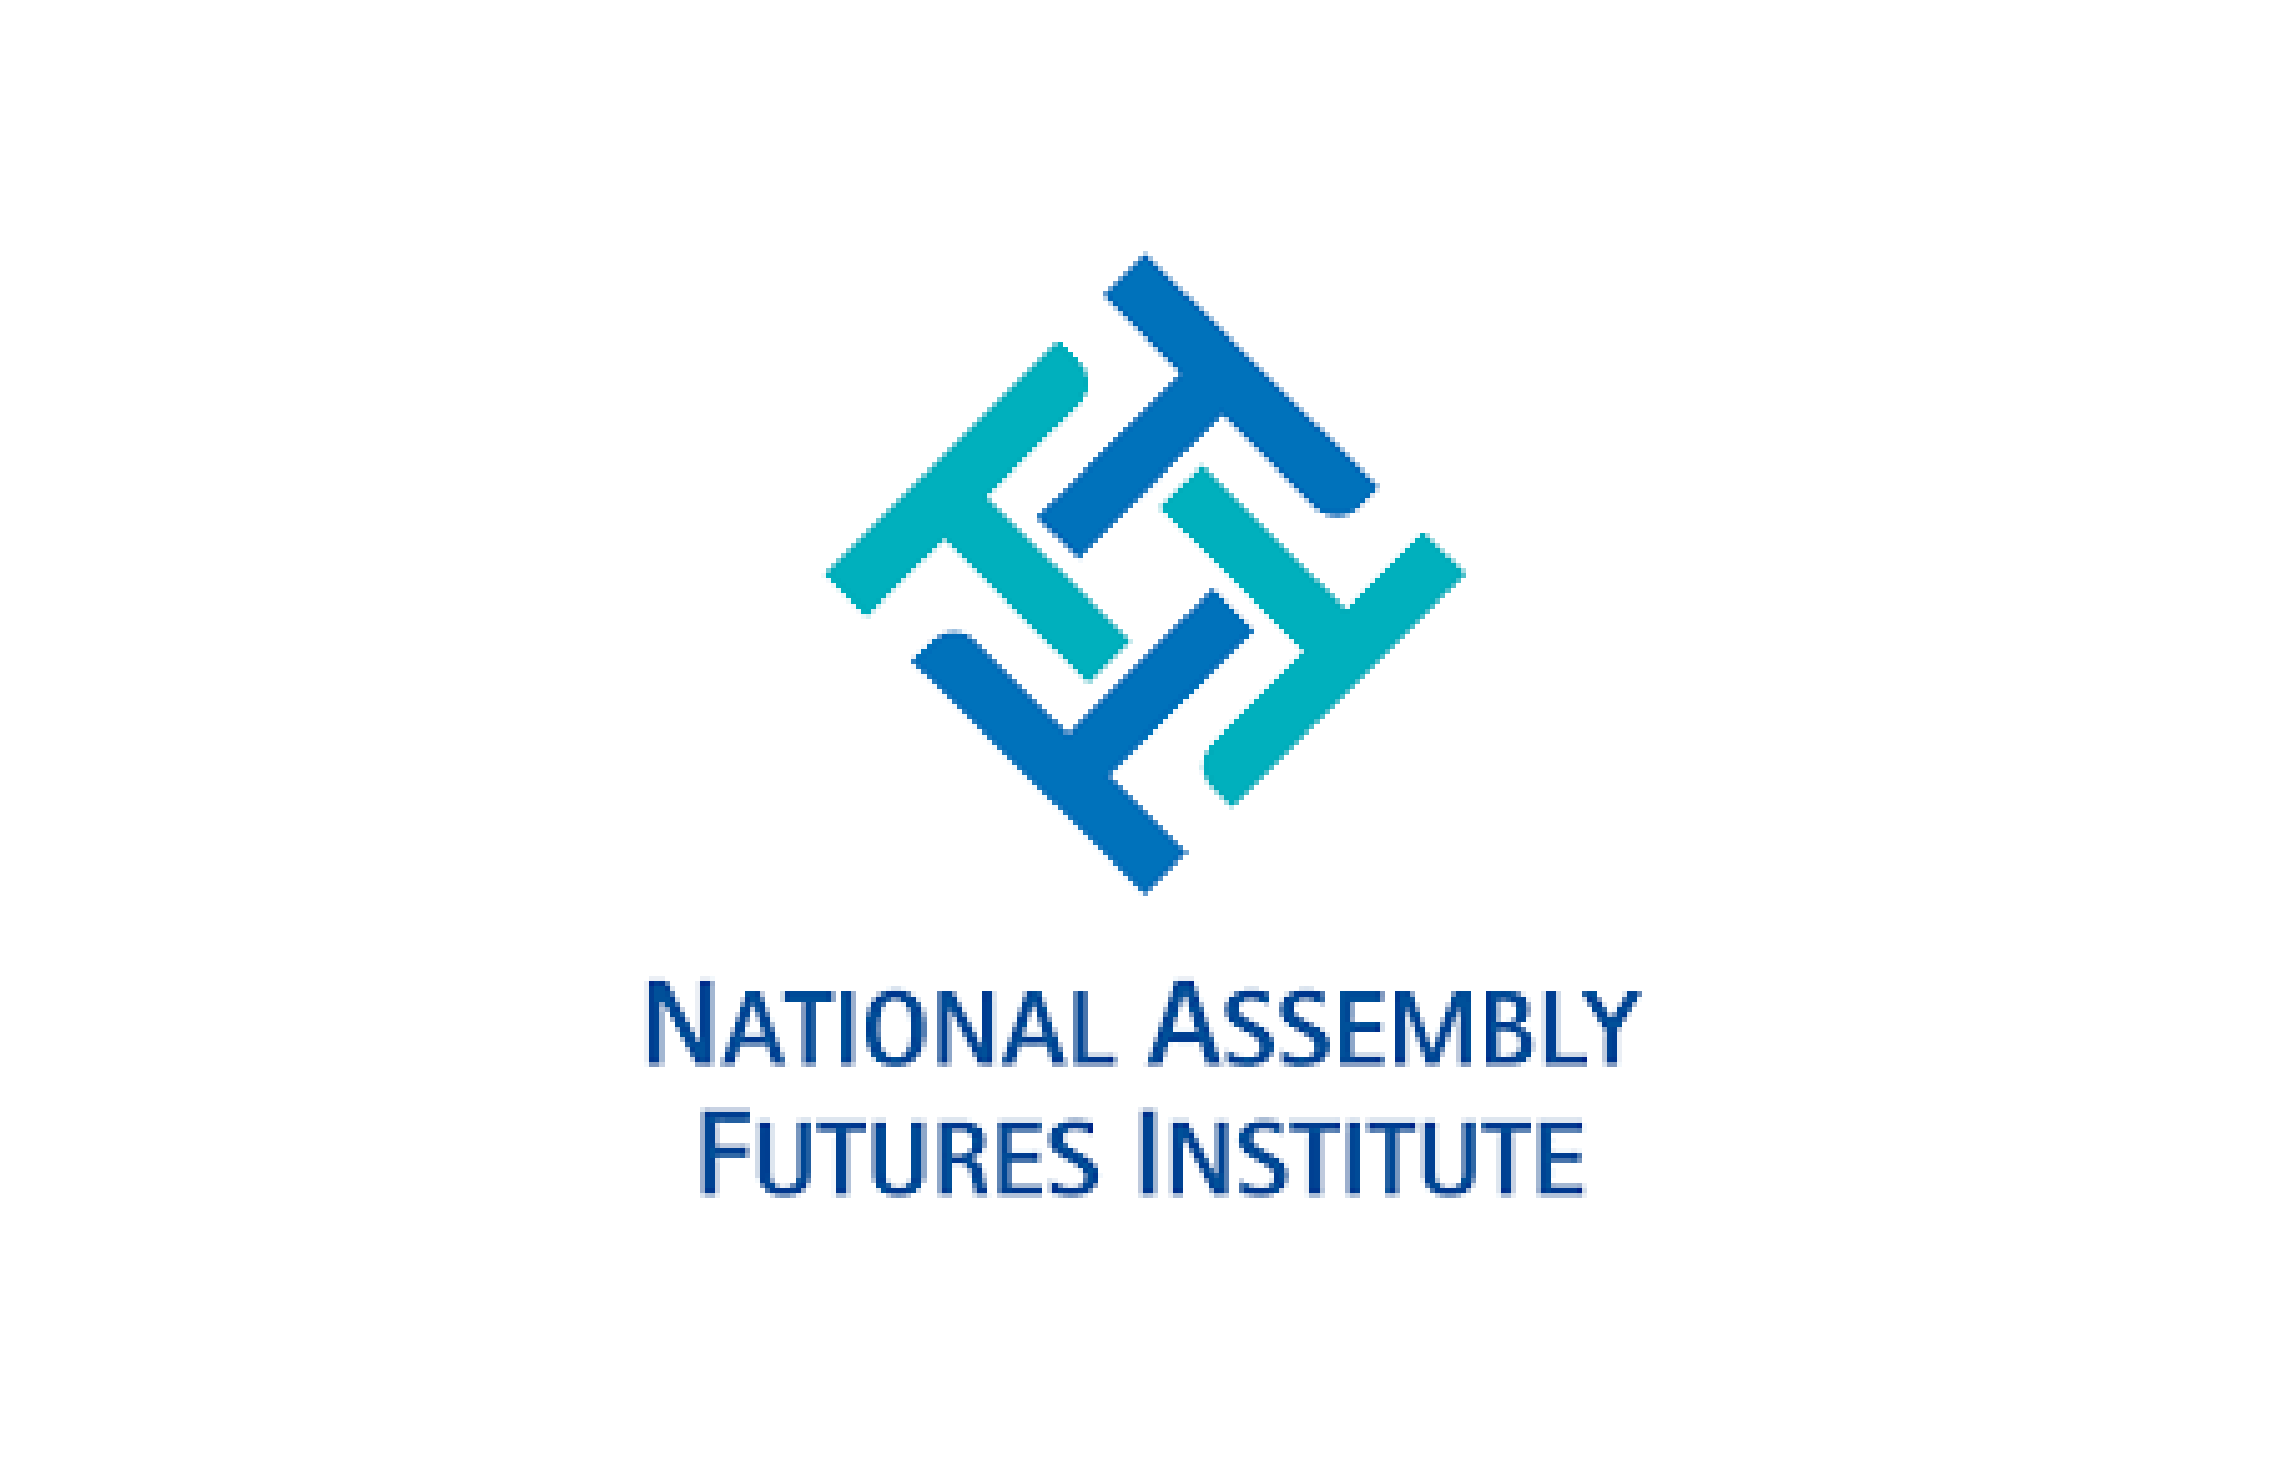 Página principal de la web de la Asamblea del Instituto del Futuro de Corea